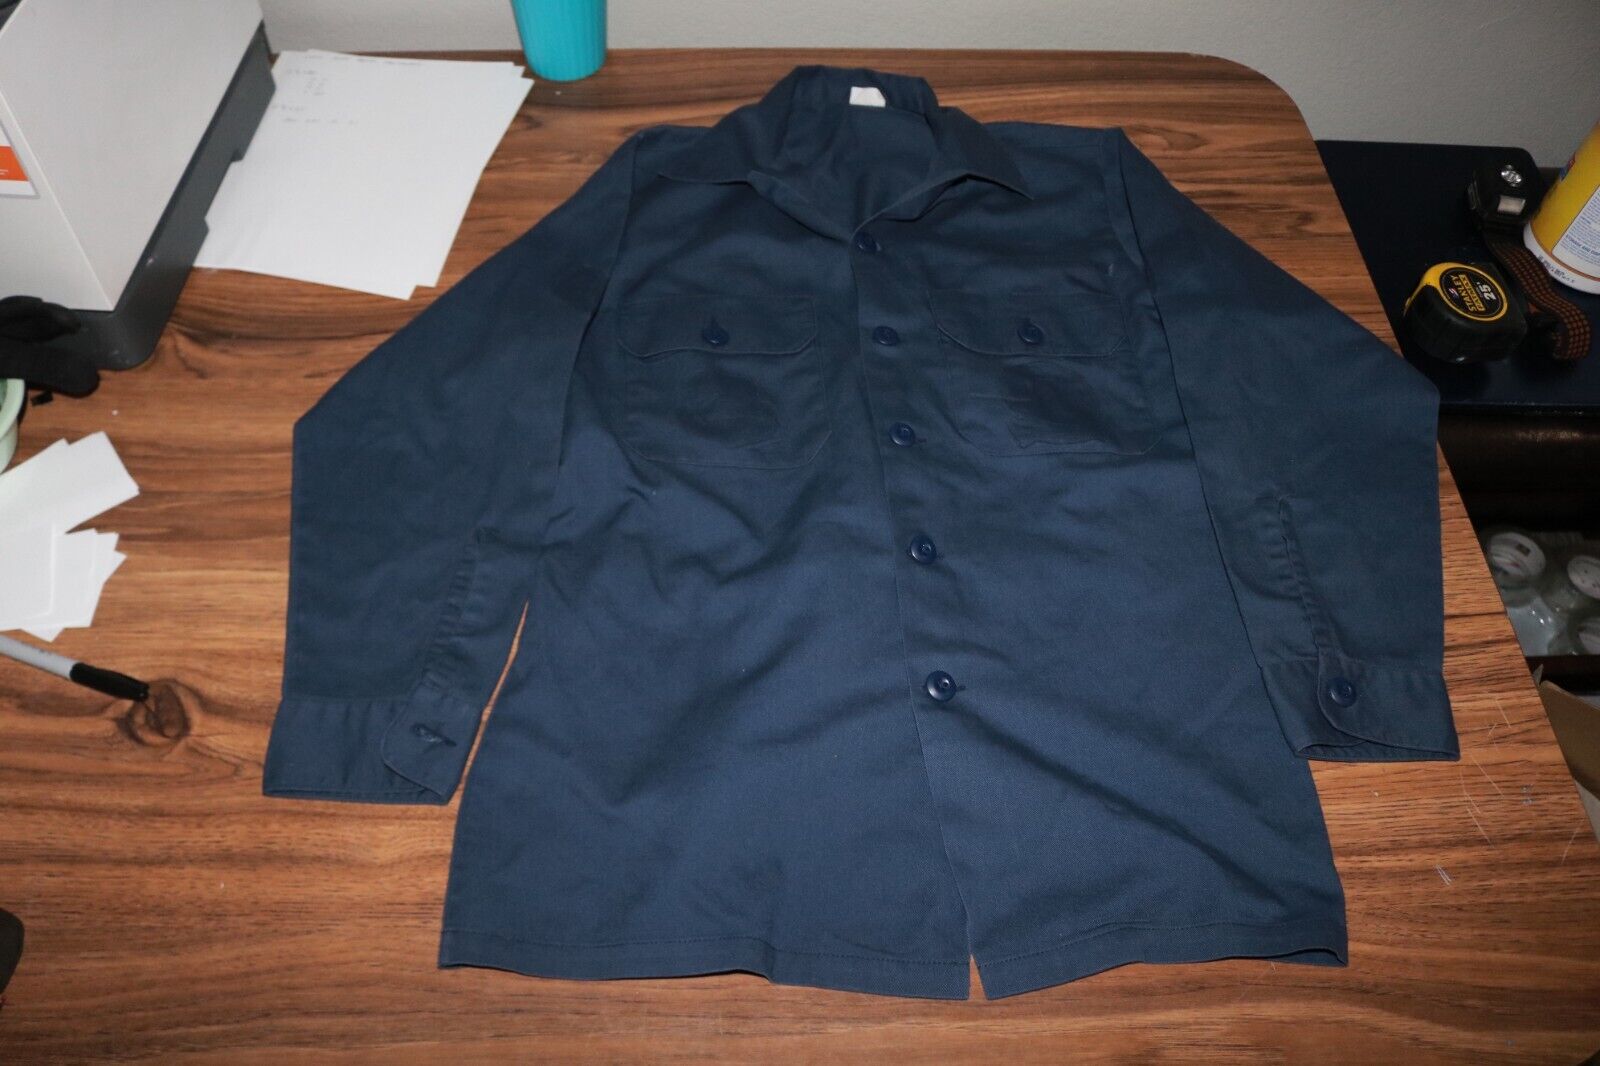 Excellent HTF USAF poly cotton fatigue shirt Blue 70's 80's size 15 1/2 x 31